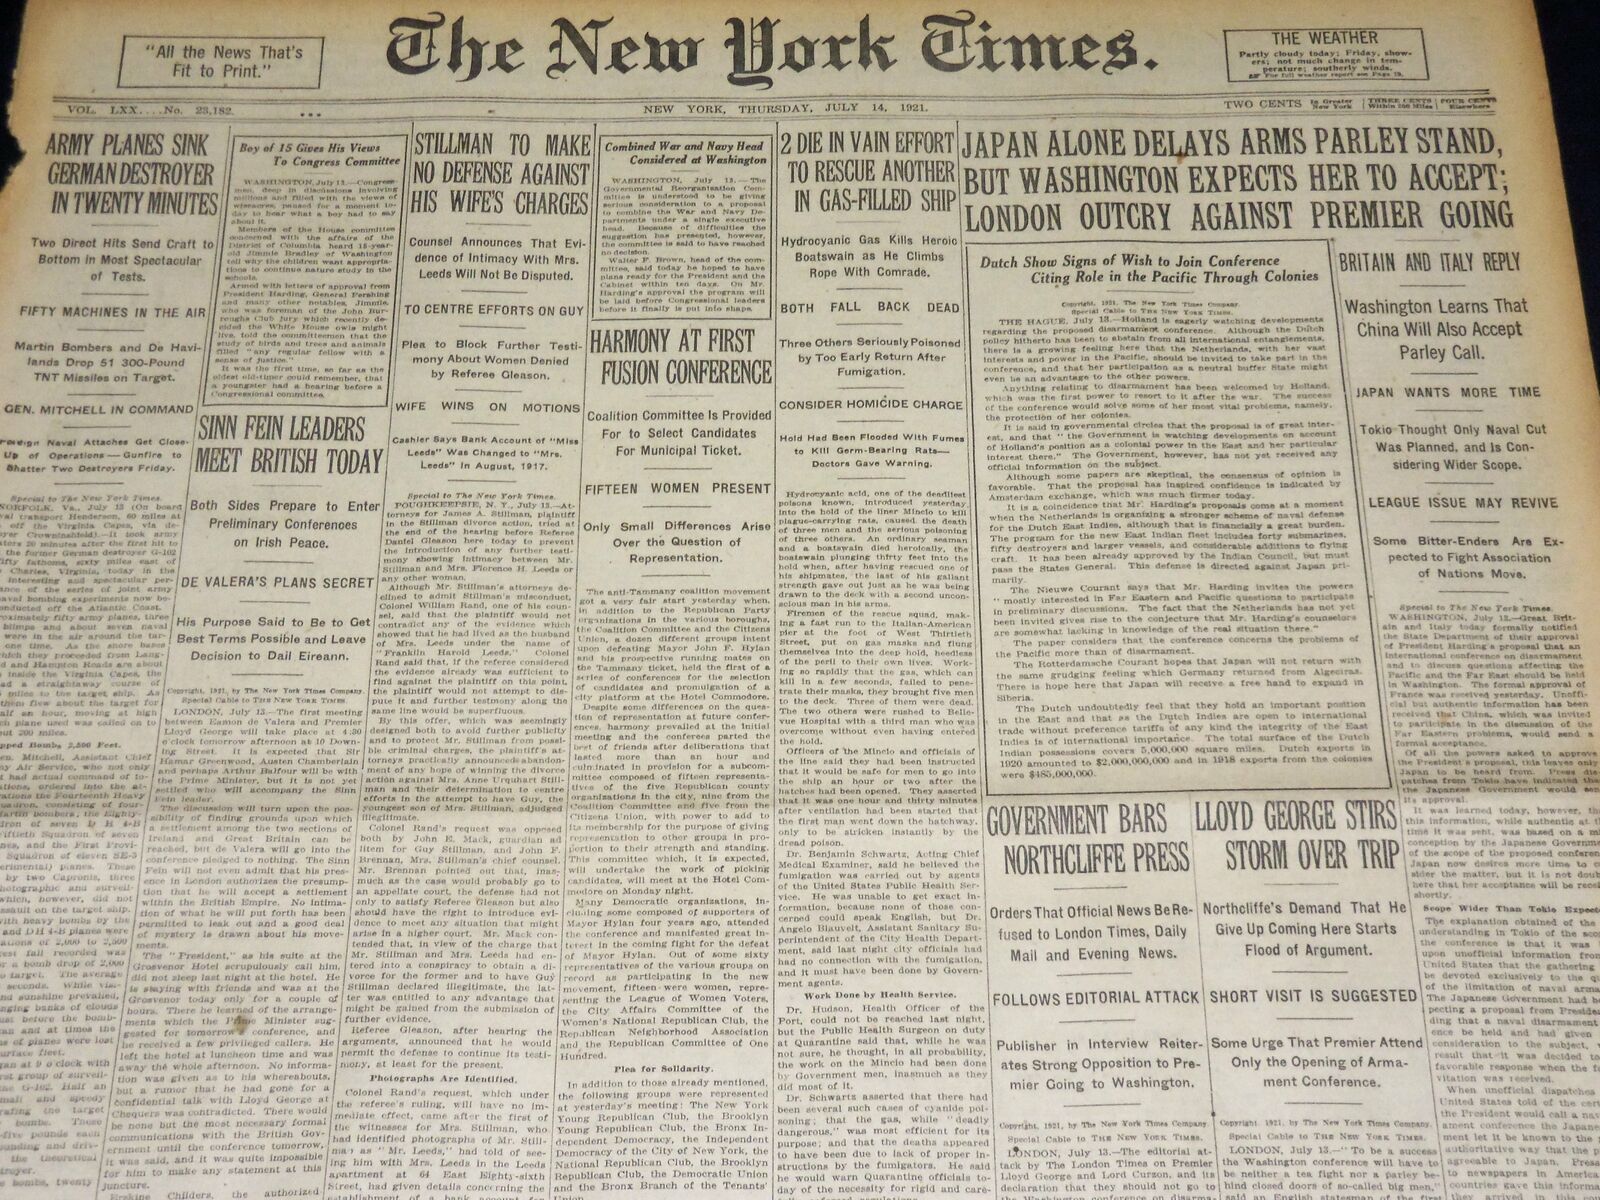 1921 JULY 14 NEW YORK TIMES - SINN FEIN LEADERS MEET BRITISH TODAY - NT 8703